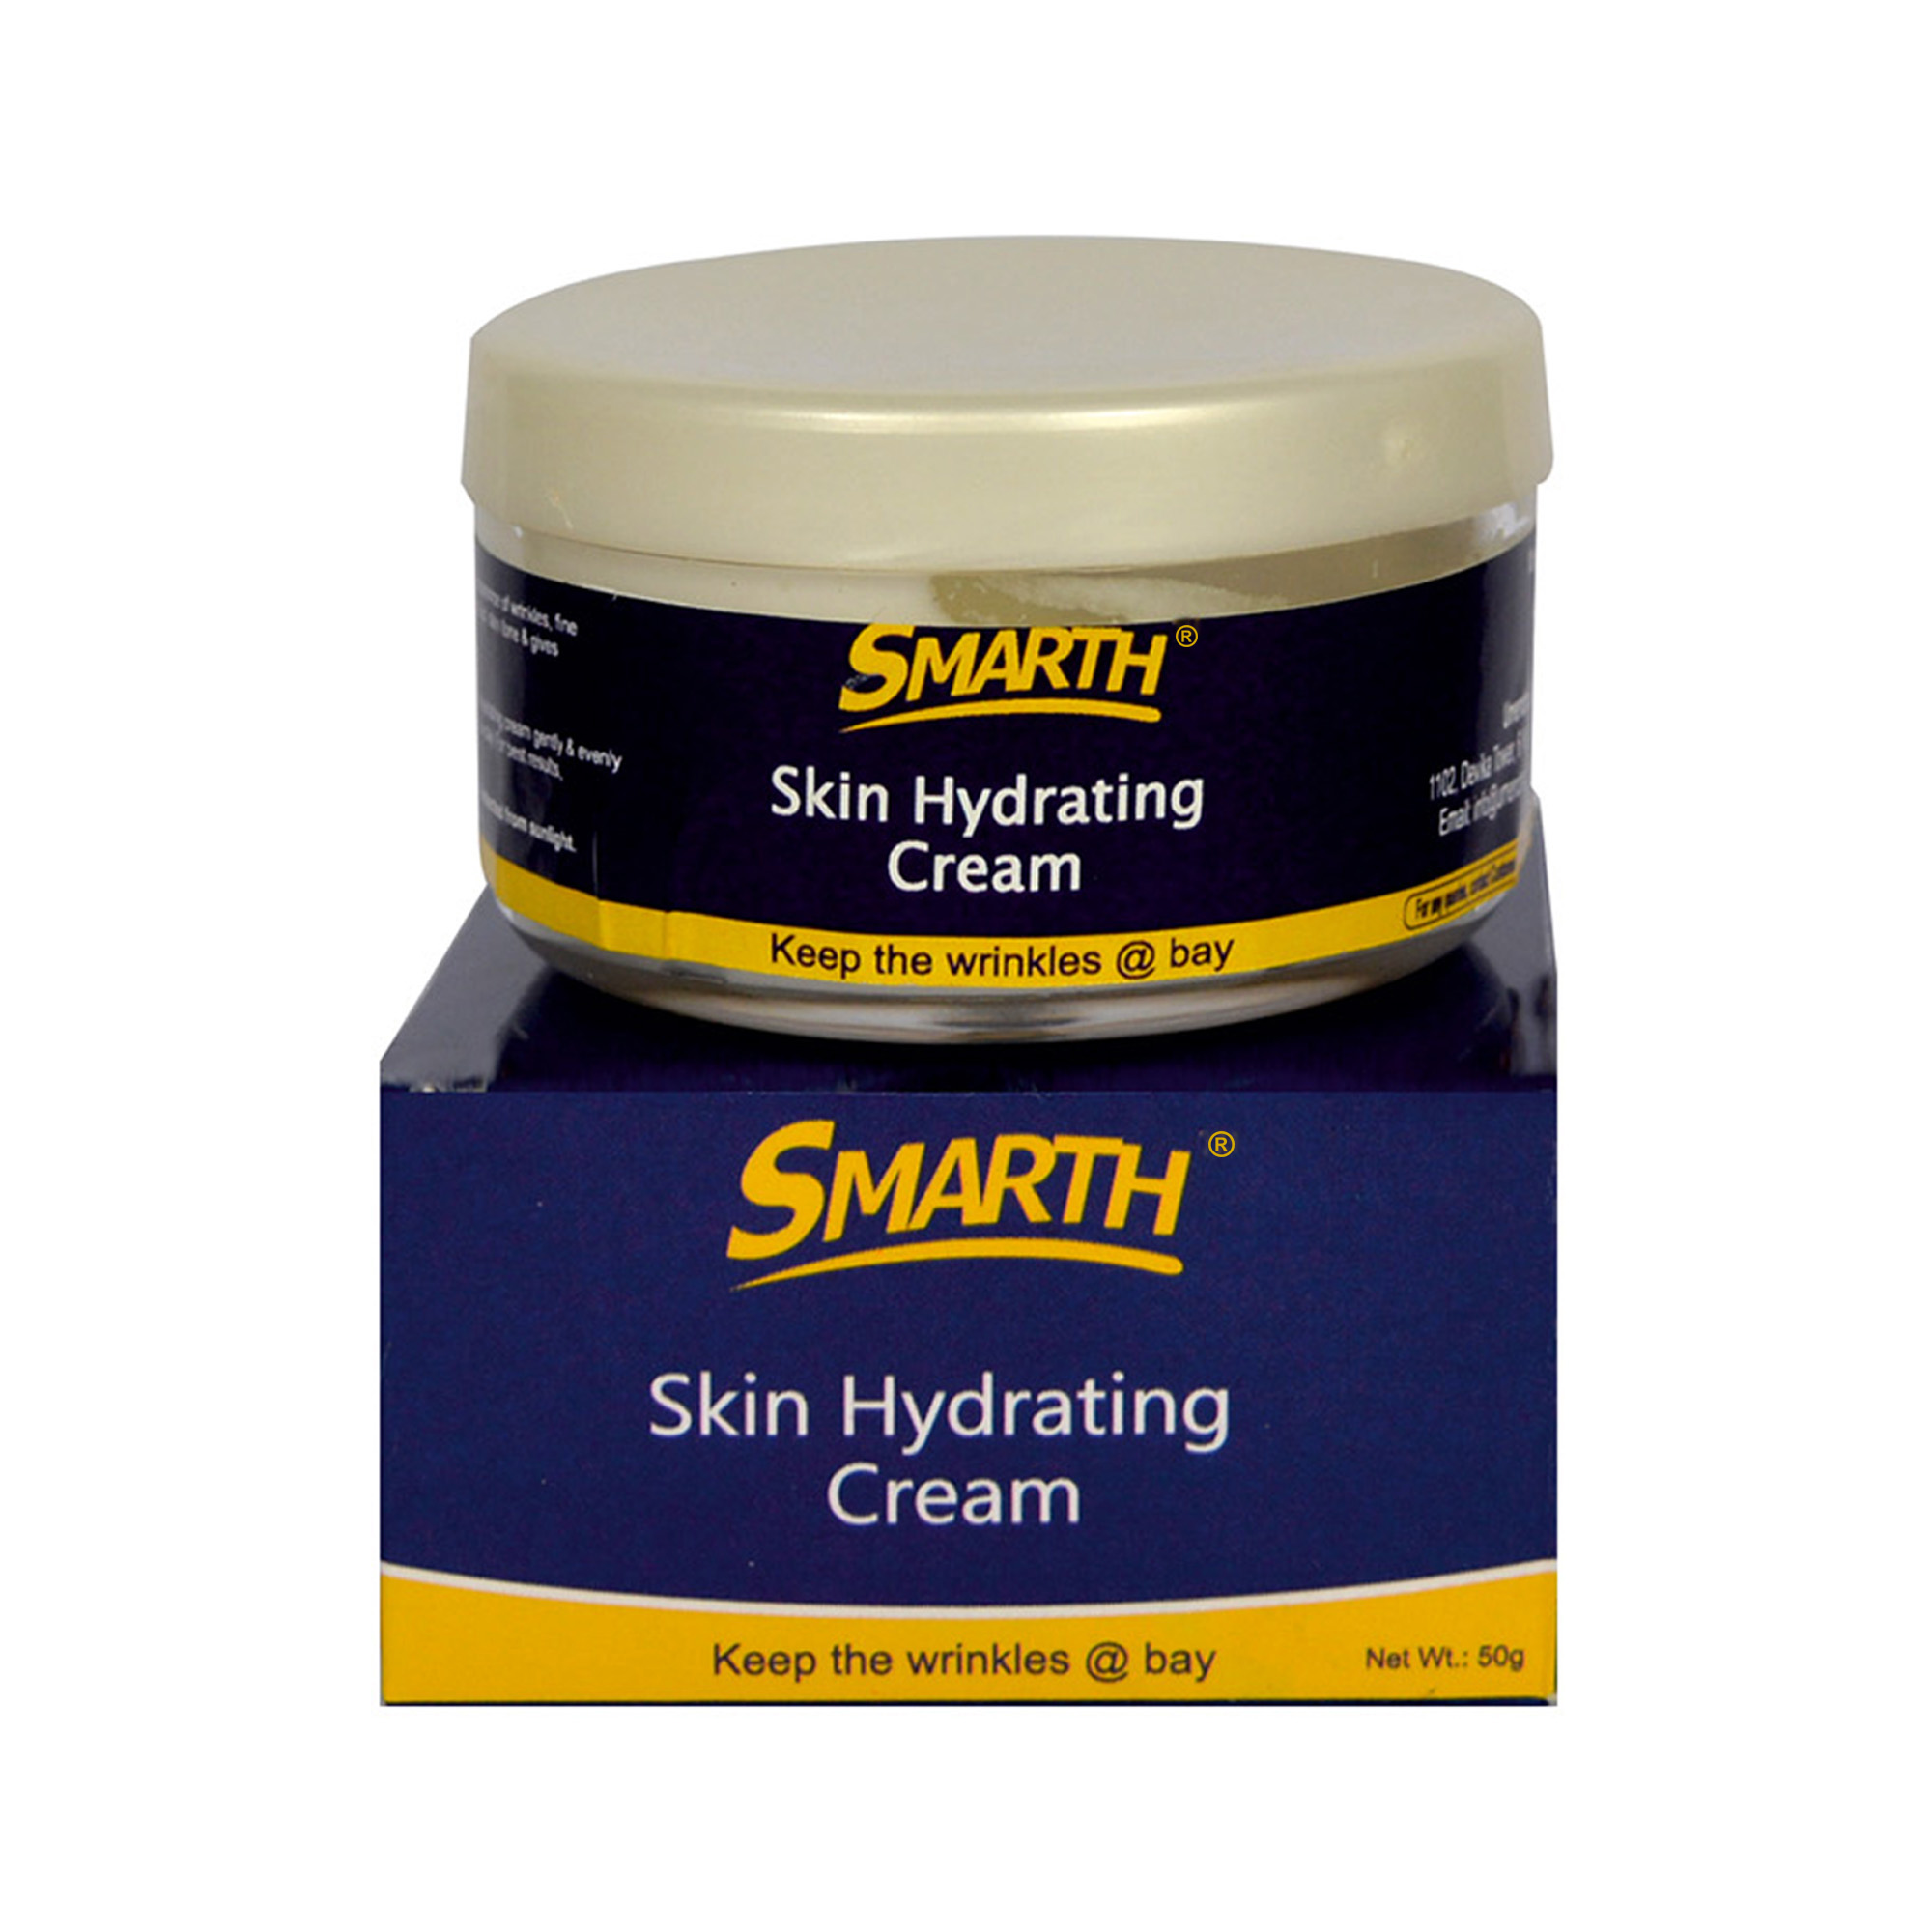 Skin Hydrating Cream